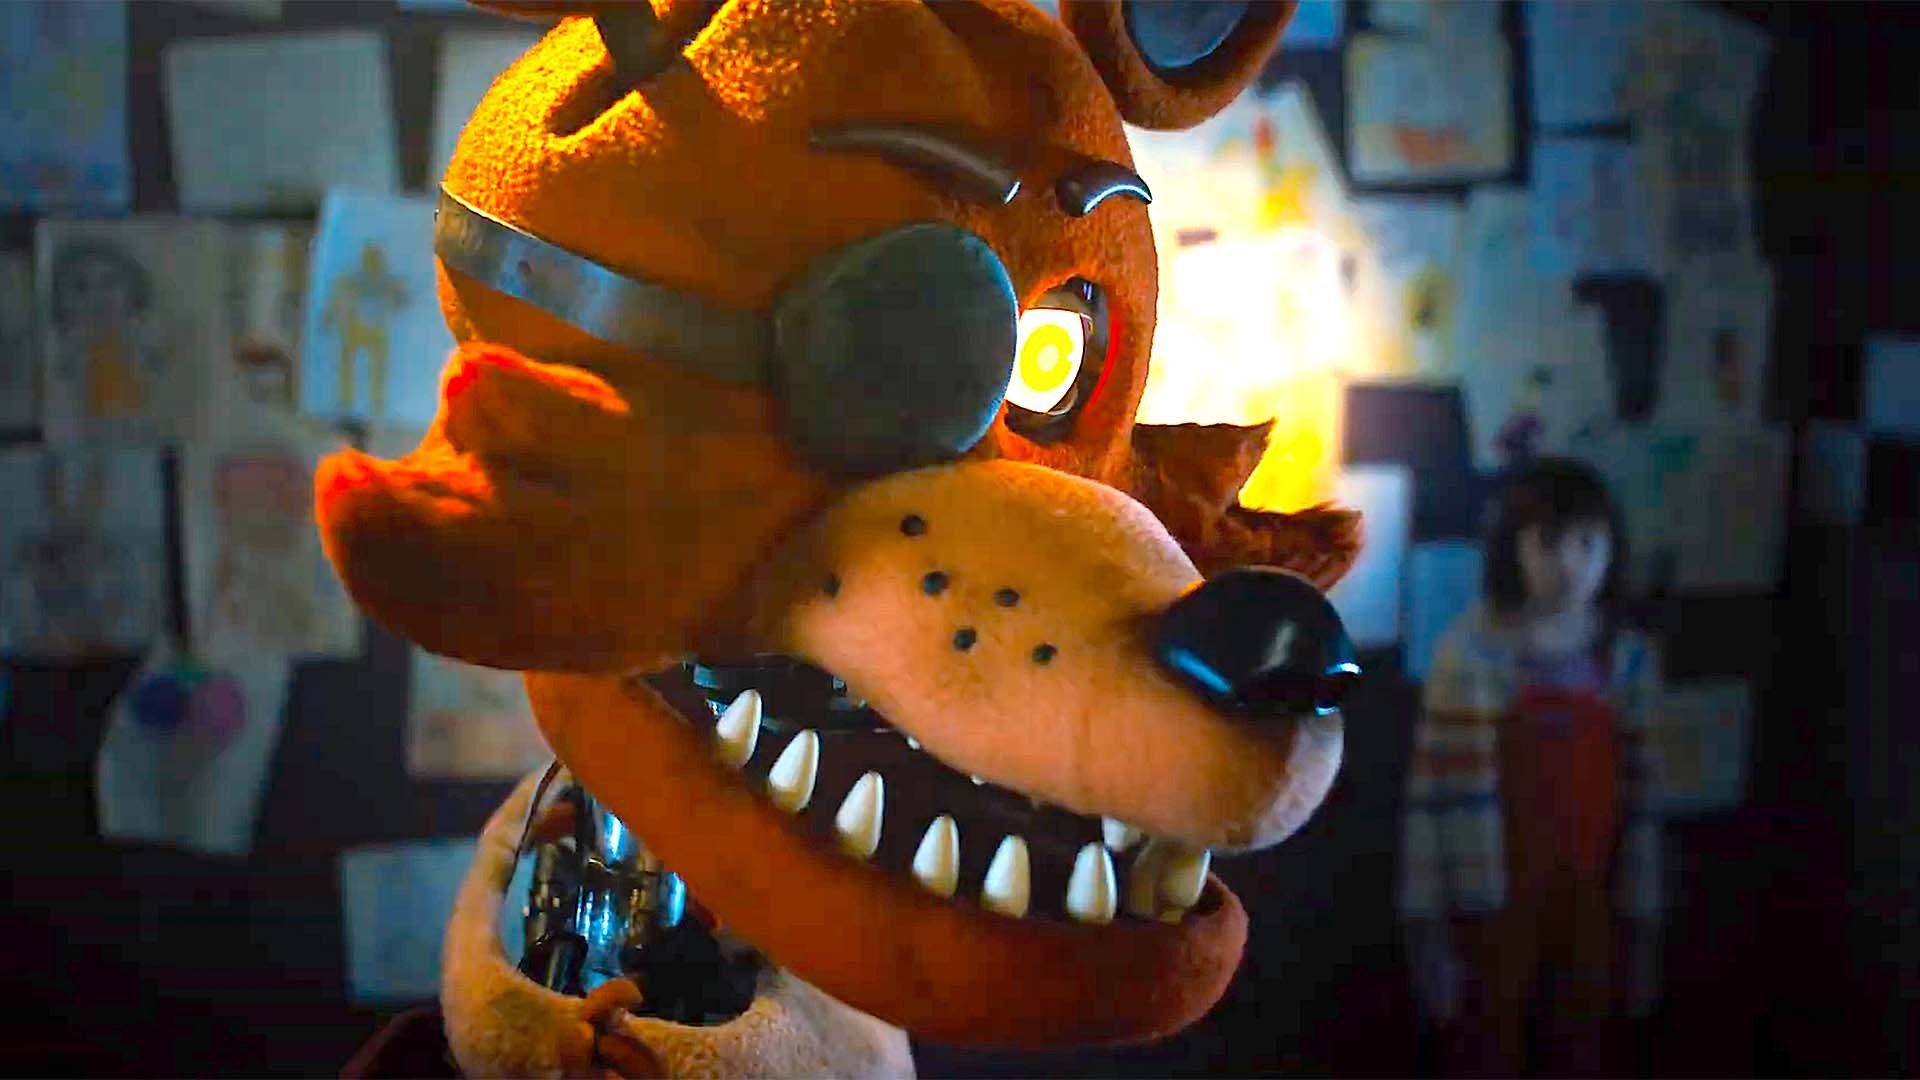 Watch Josh Hutcherson in 'Five Nights at Freddy's Trailer – The